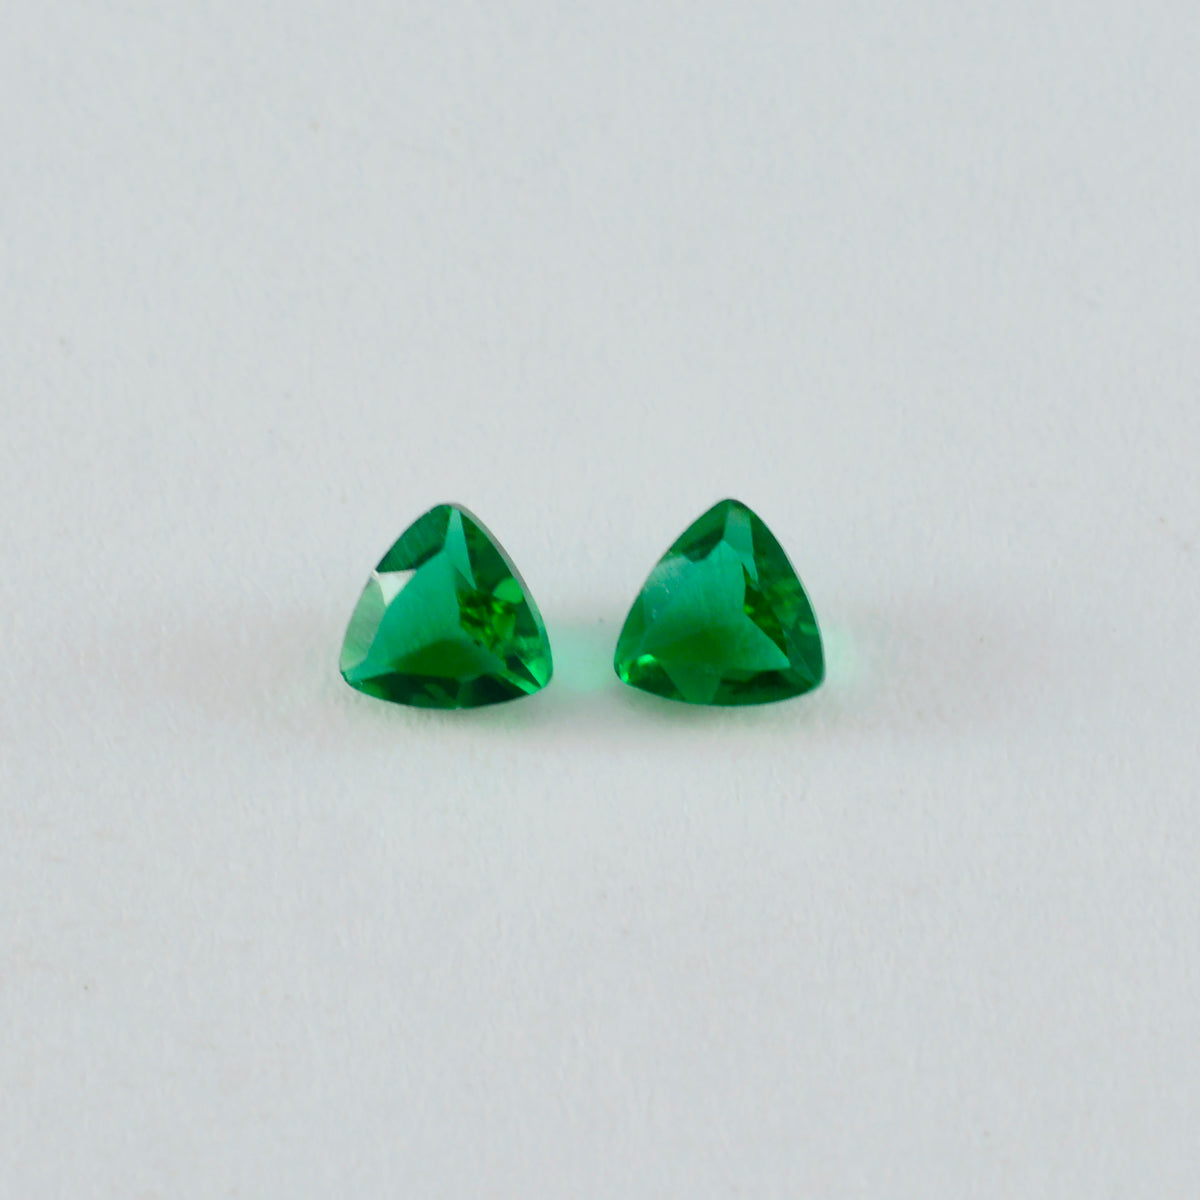 Riyogems 1PC Green Emerald CZ Faceted 9x9 mm Trillion Shape cute Quality Loose Stone